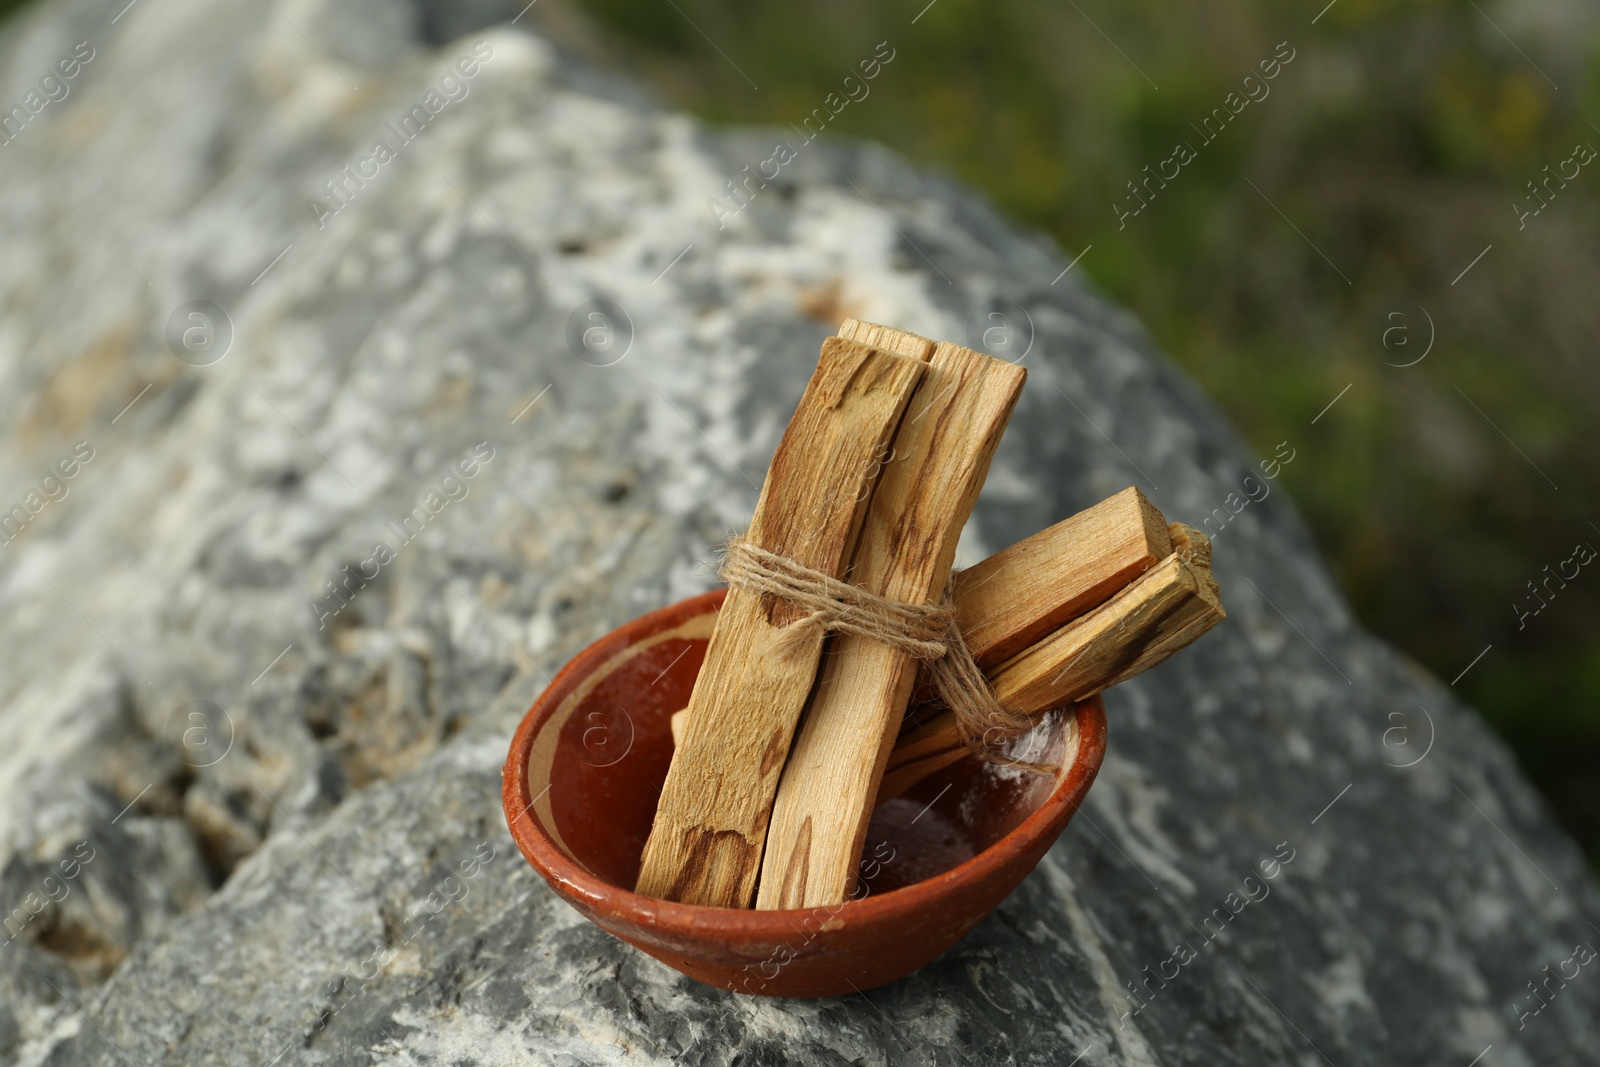 Photo of Many palo santo sticks on stone surface outdoors